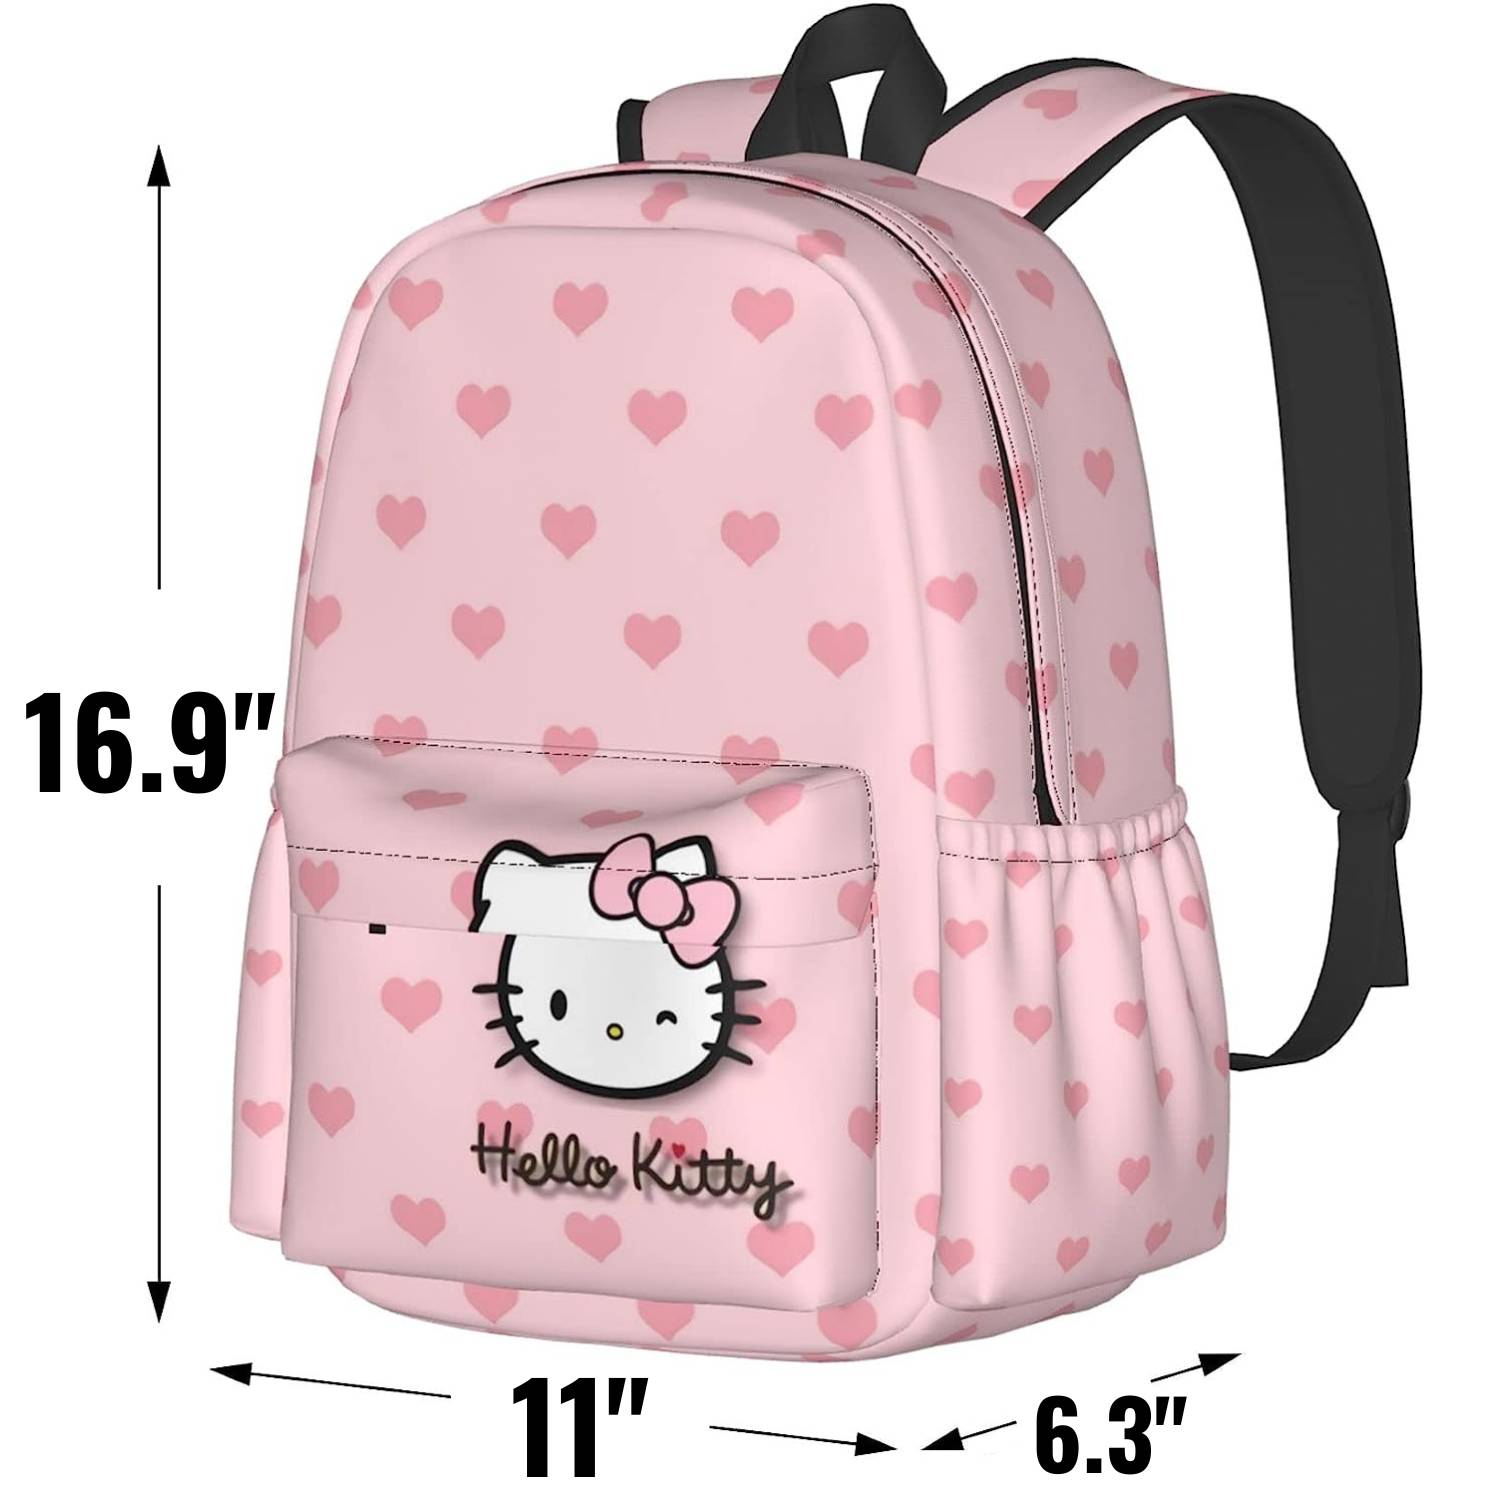 buy hello kitty hiking backpack